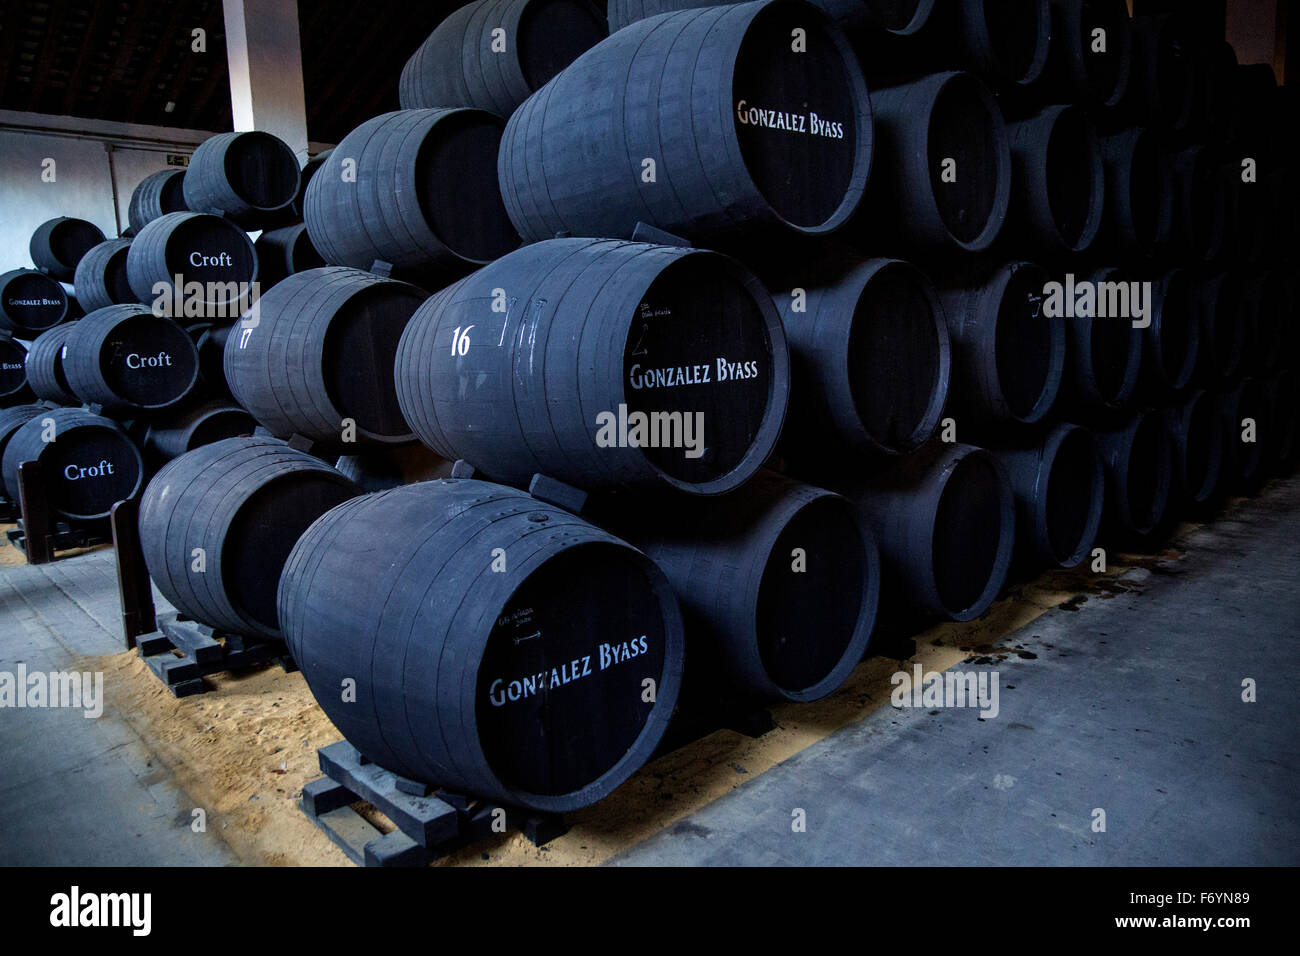 Oak barrels of maturing sherry wine cellar, Gonzalez Byass bodega, Jerez de la Frontera, Cadiz province, Spain Stock Photo